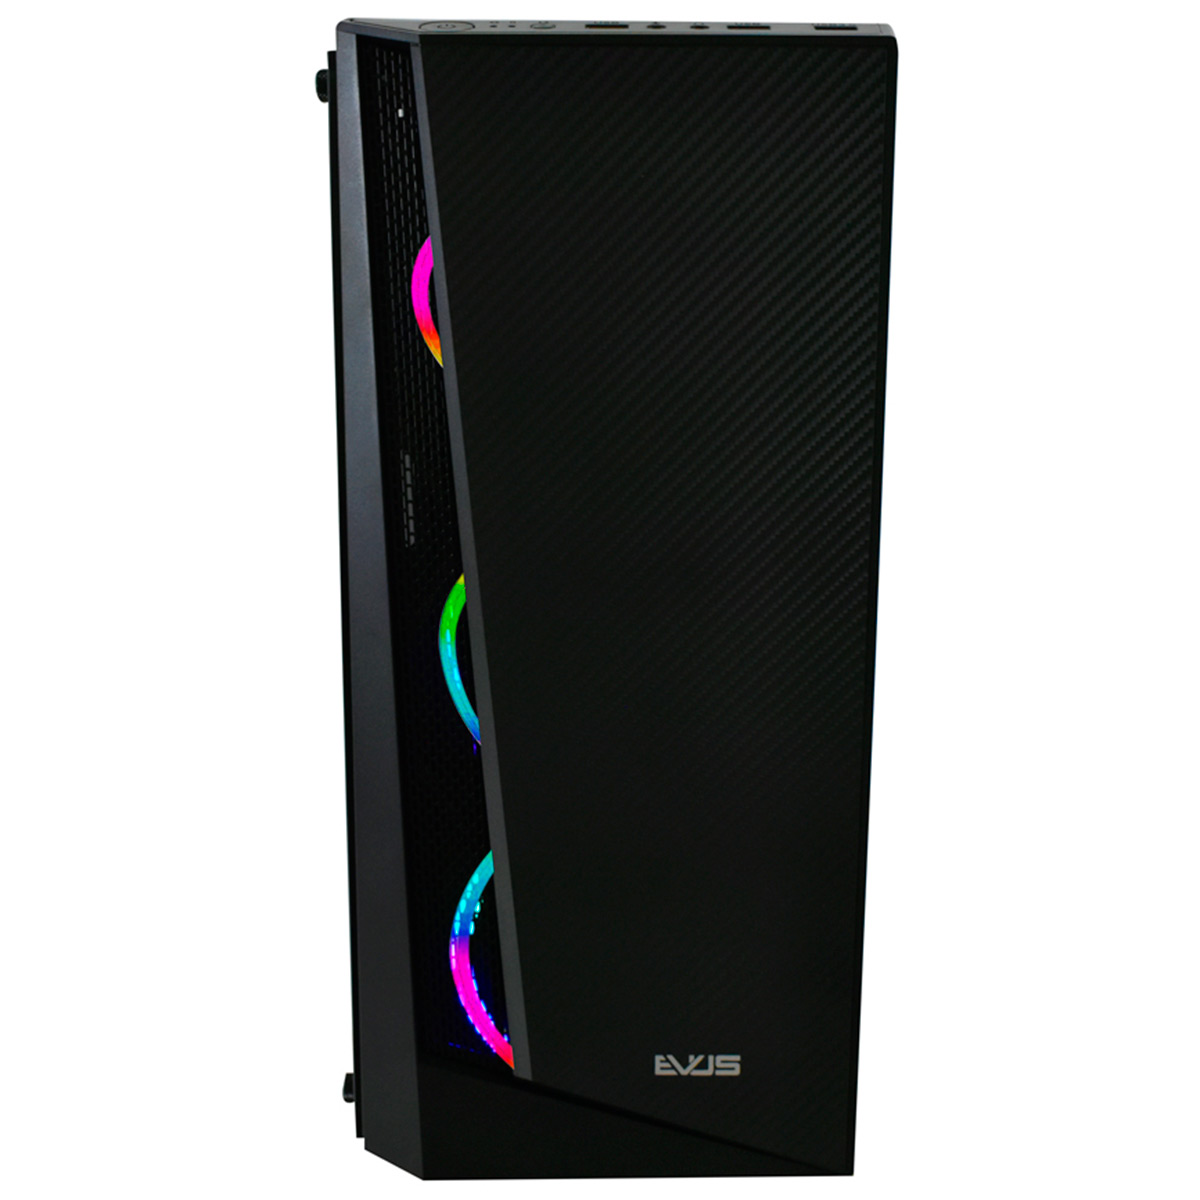 Gabinete Gamer Evus EV-G15 - Lateral em Vidro Temperado - 3 Coolers RGB Inclusos